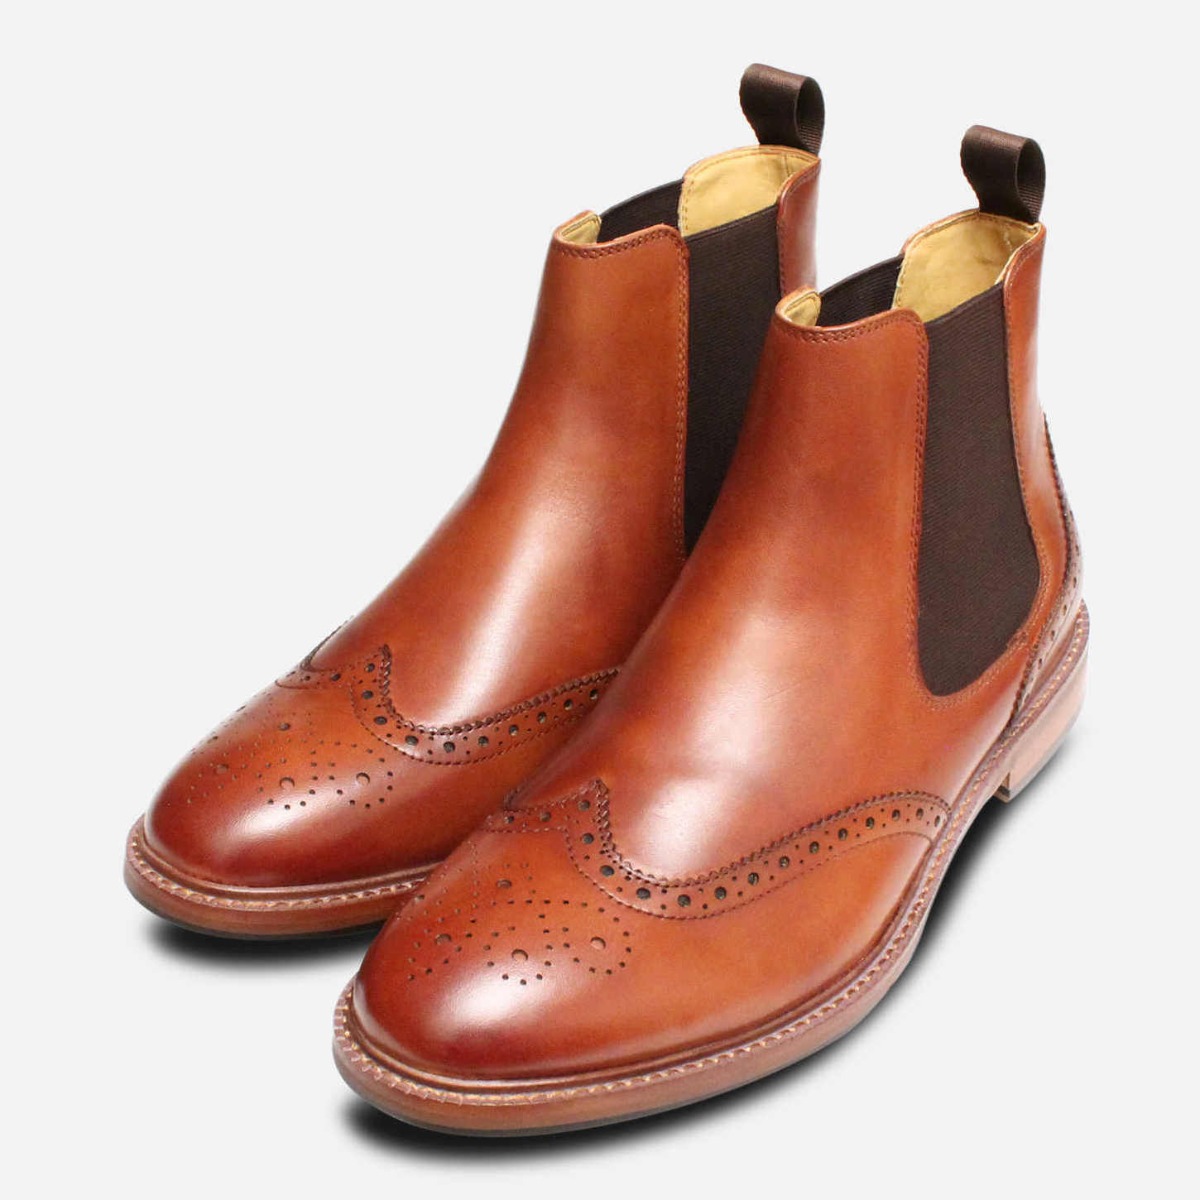 Steptronic Buckingham 2 Country Brogue Boots in Cognac | eBay